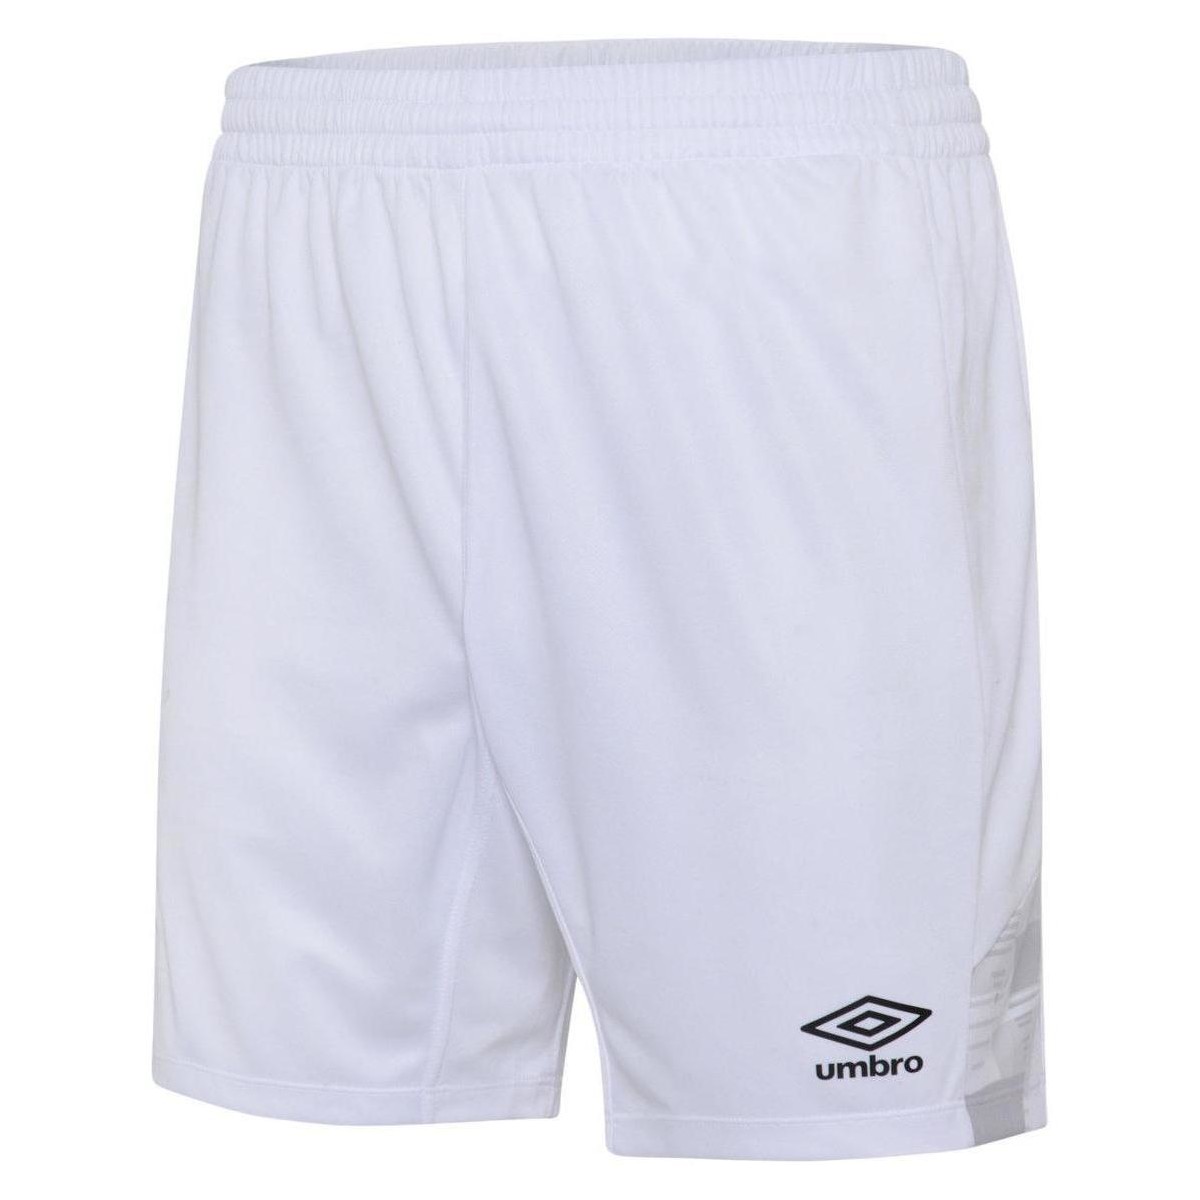 textil Niños Shorts / Bermudas Umbro Vier Blanco